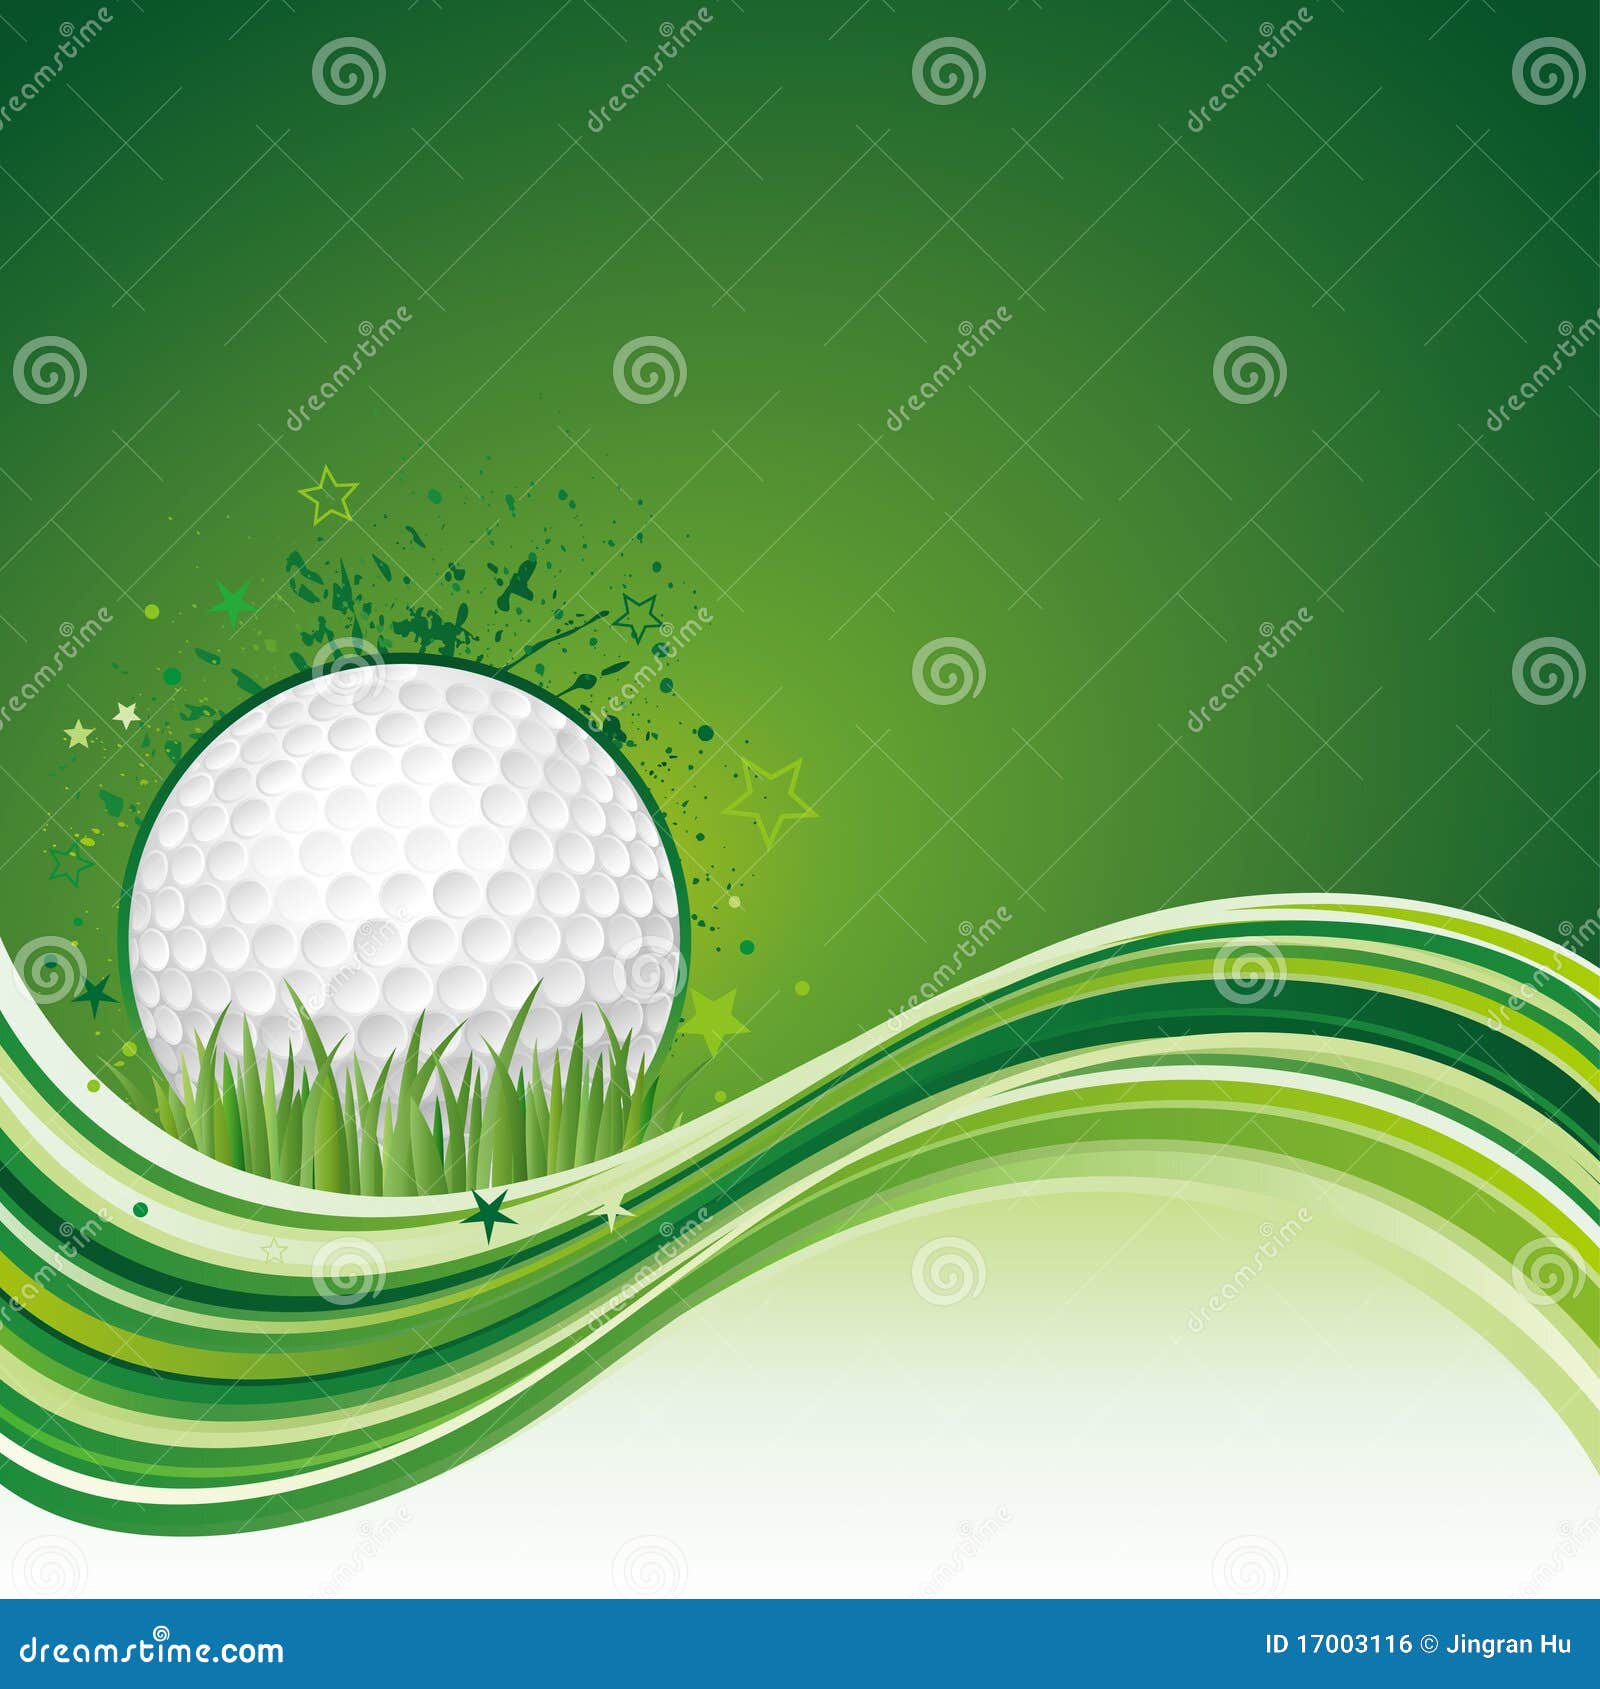 Golf background stock vector. Illustration of shape, ornament - 17003116